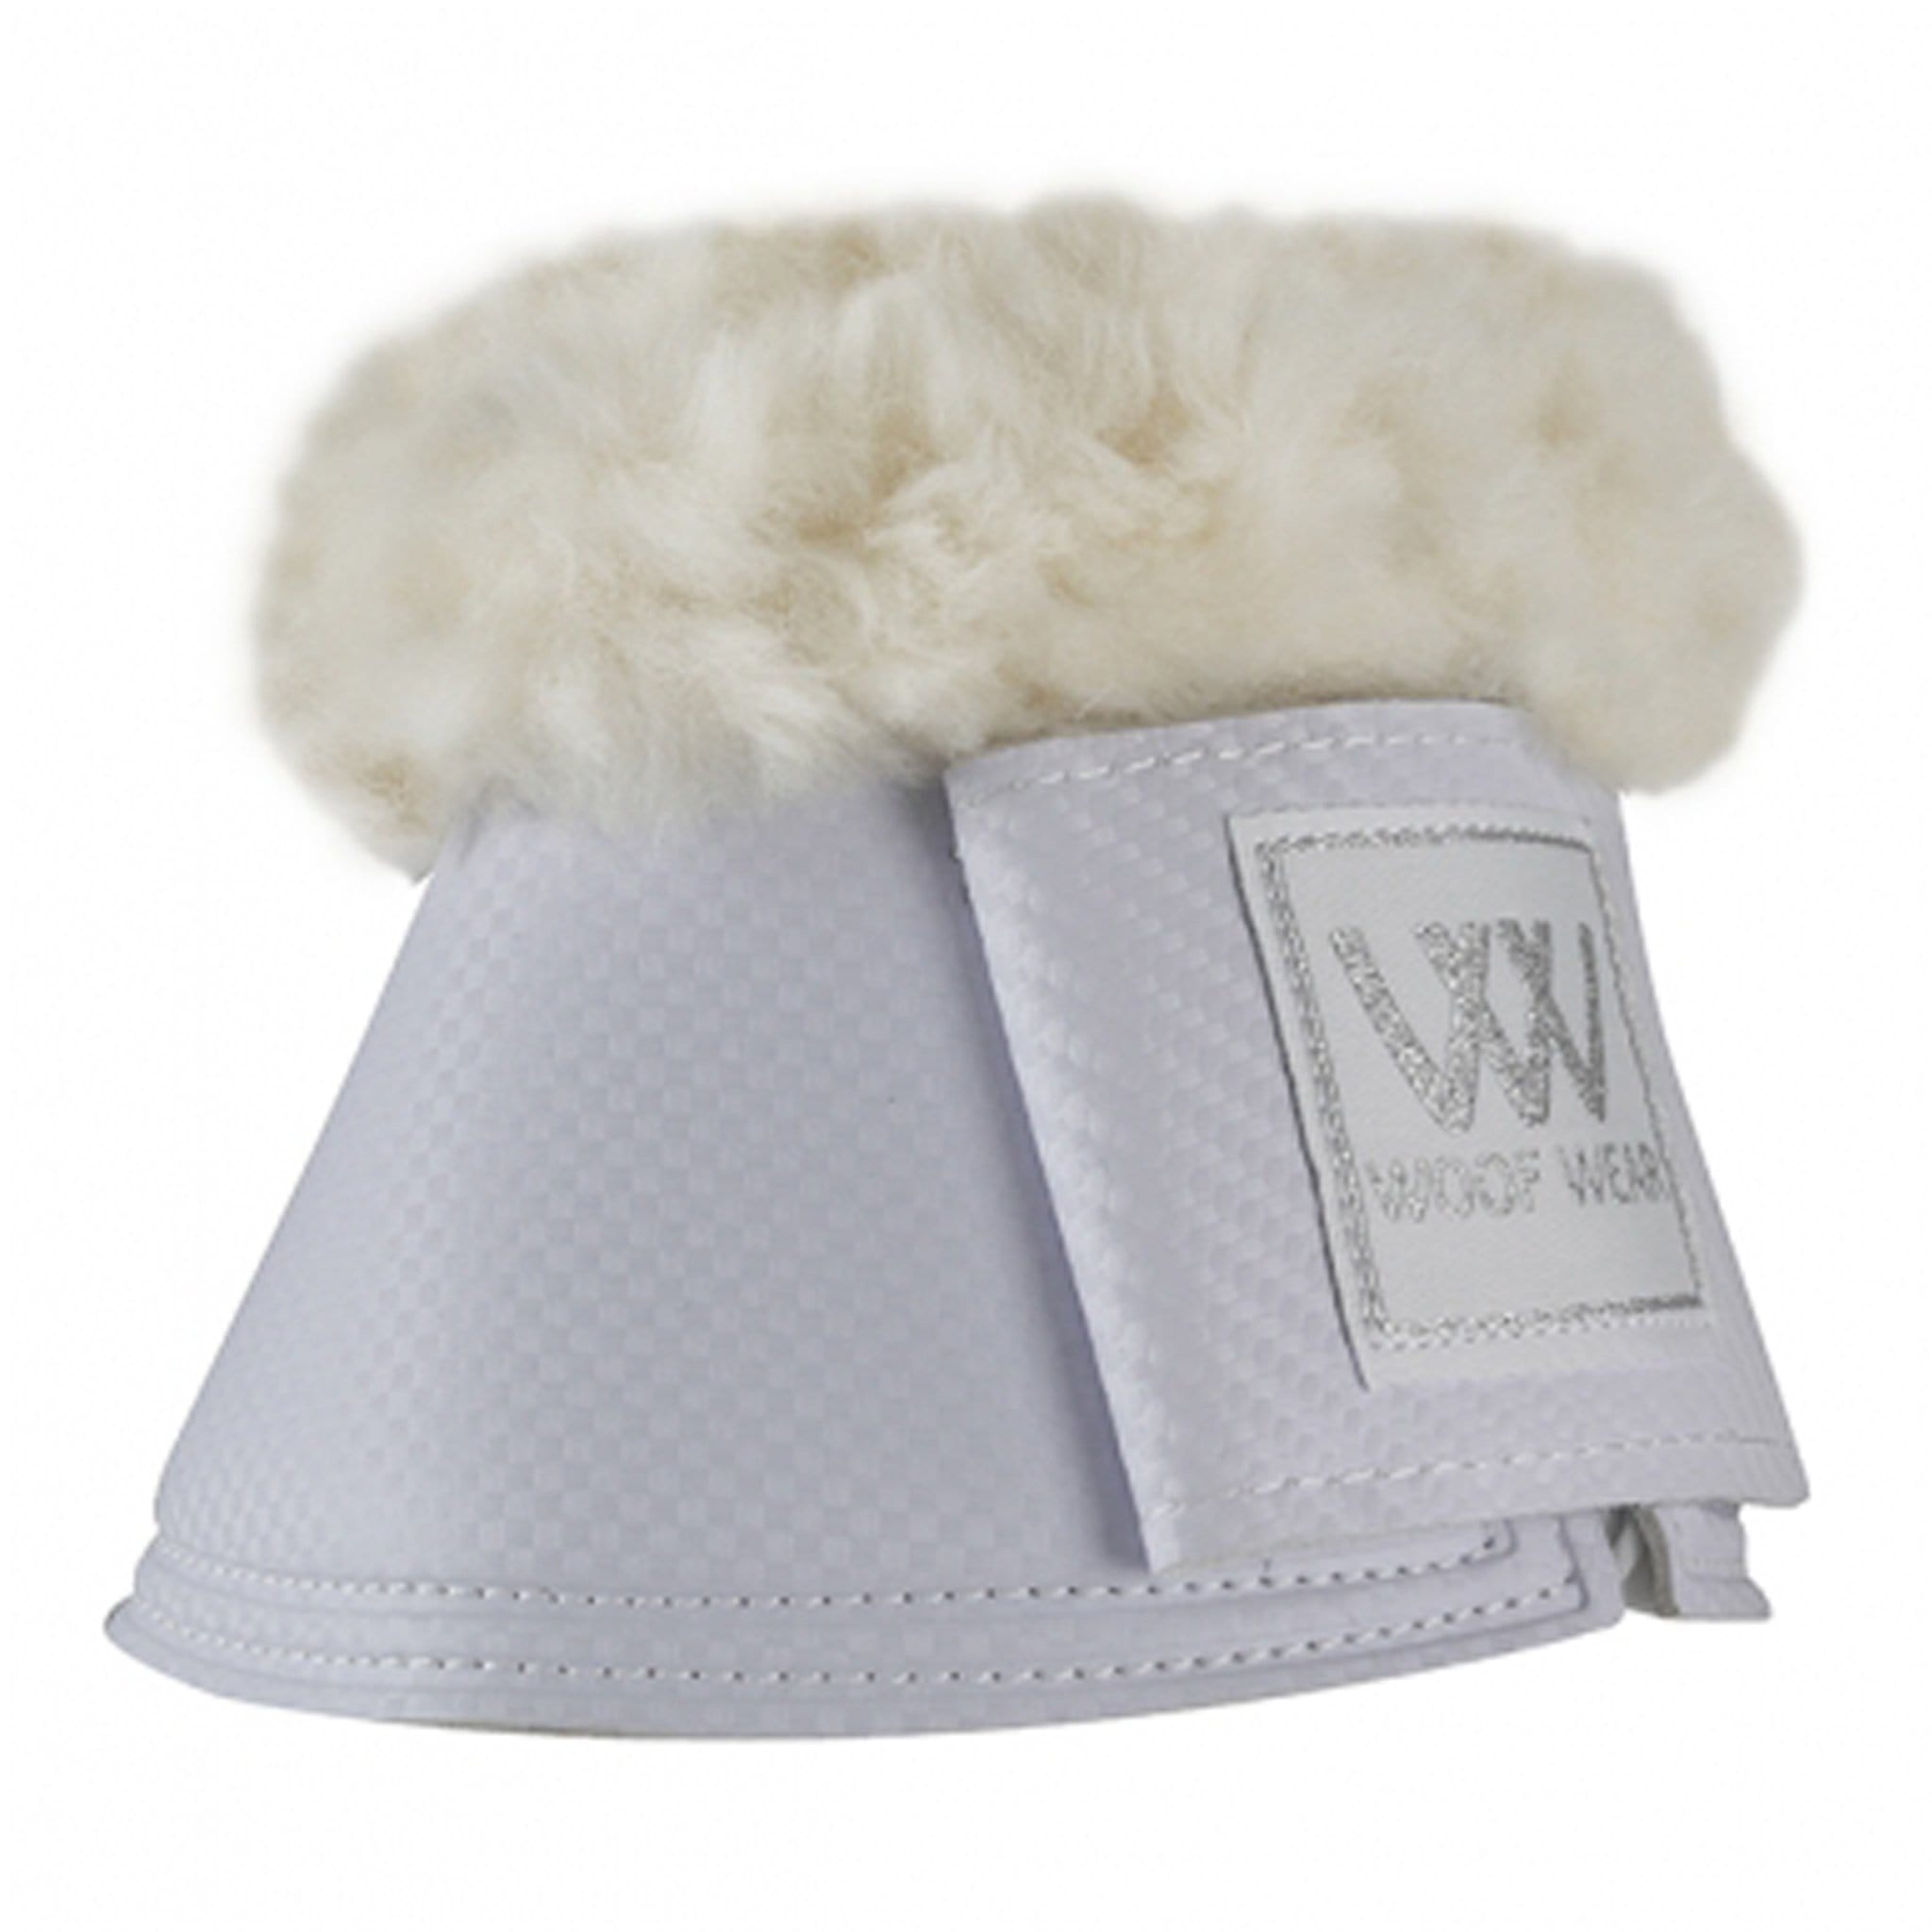 Woof Wear Pro Faux Sheepskin Over Reach Boots White WB0051